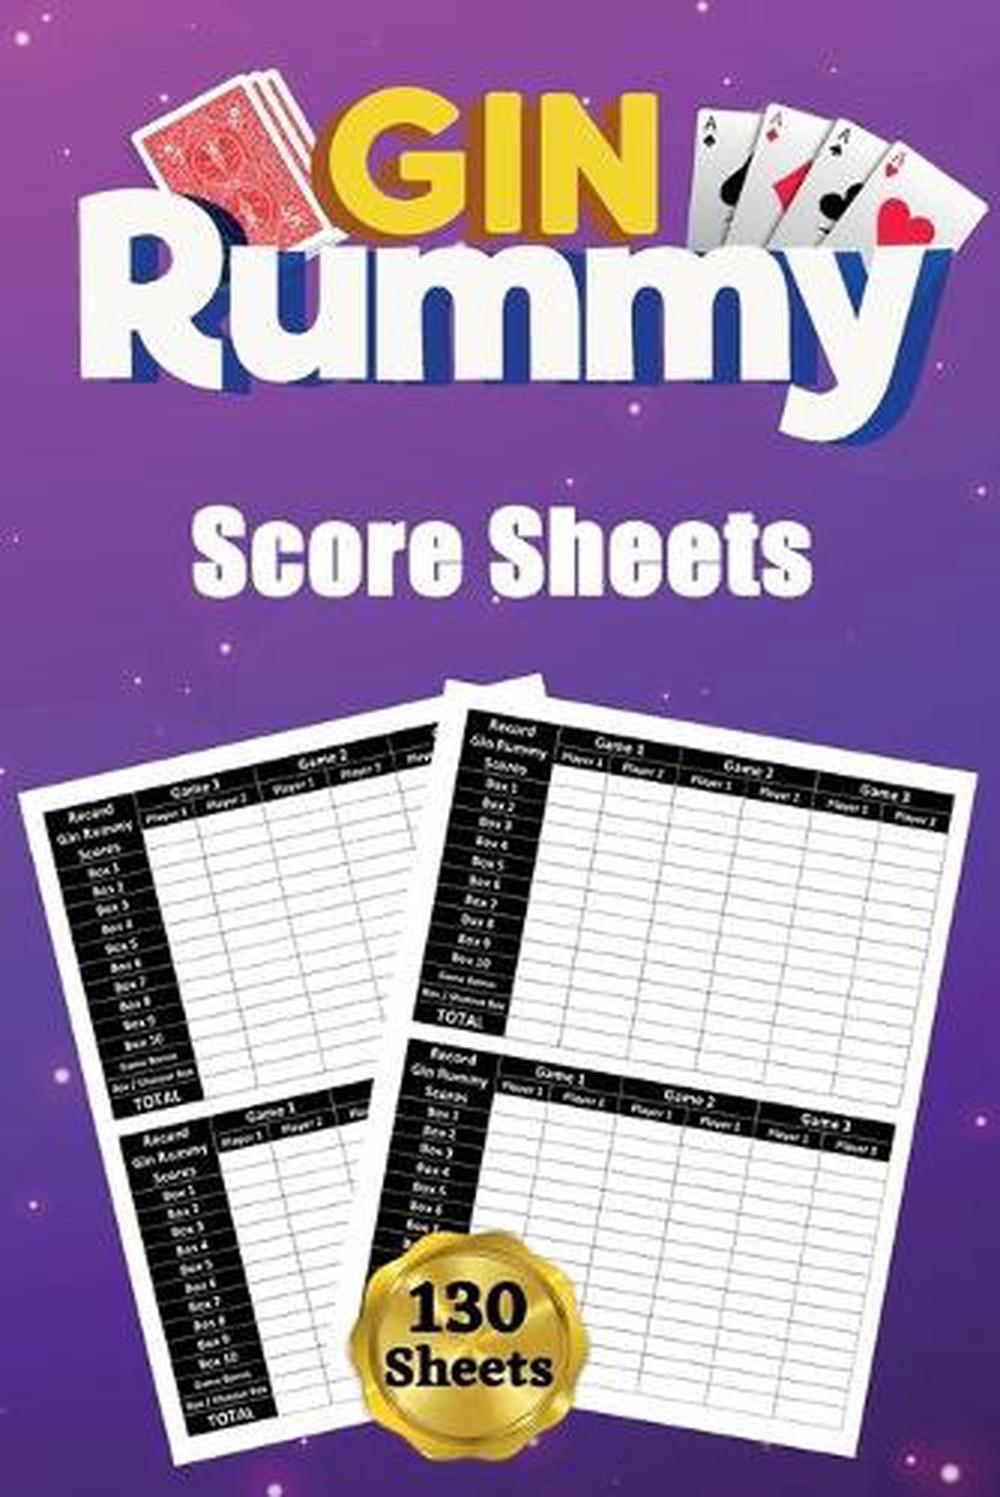 gin rummy scoring rules